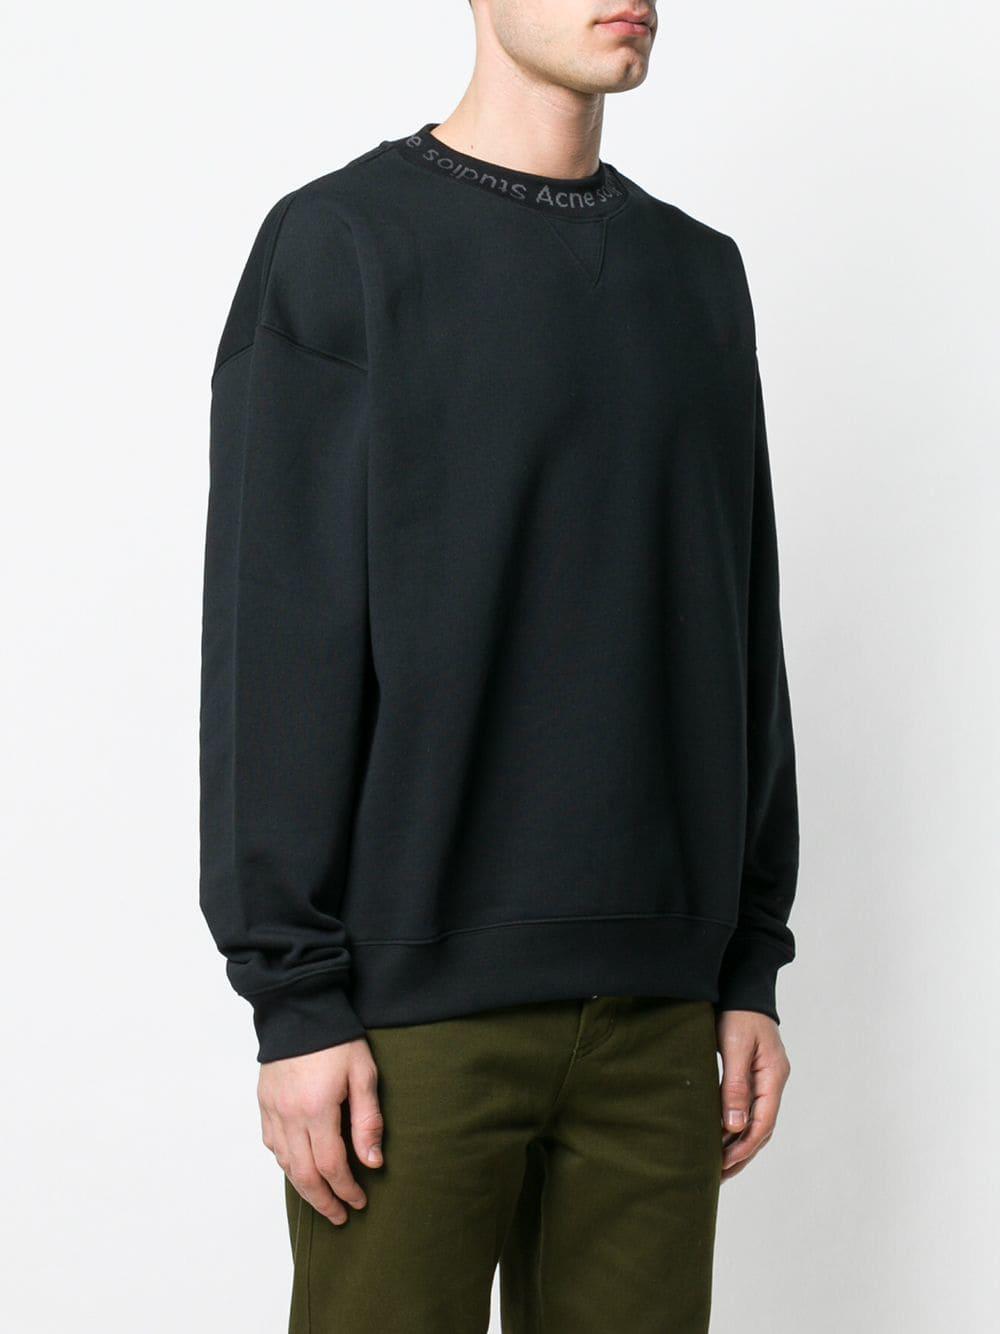 Acne Studios Flogho Iconic Sweatshirt in Black for Men - Lyst